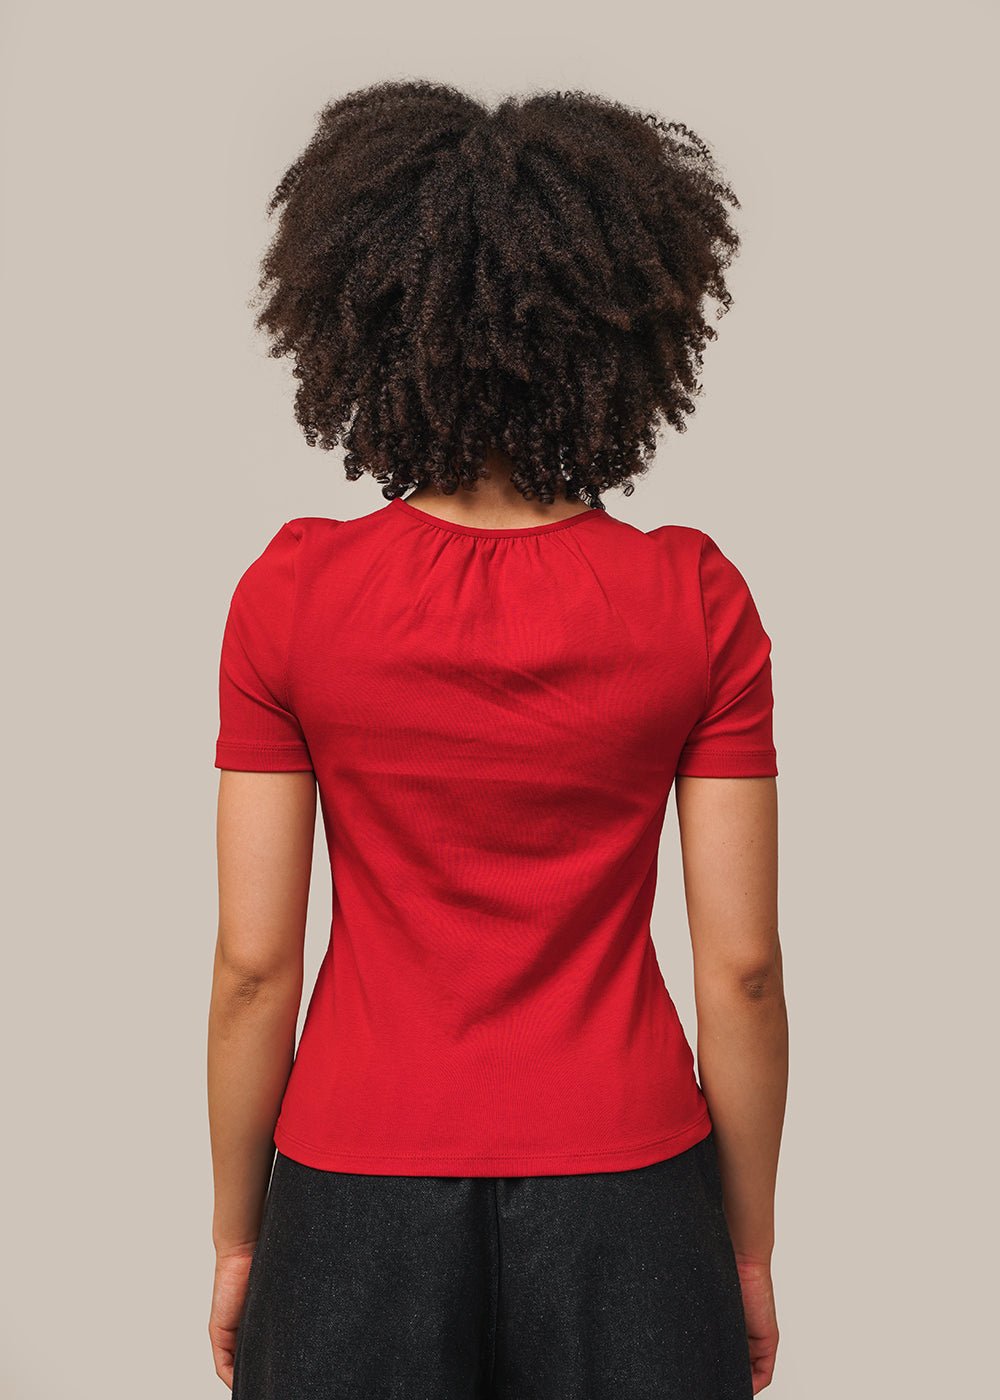 AMOMENTO Red Neck Shirring Short Sleeve Top - New Classics Studios Sustainable Ethical Fashion Canada